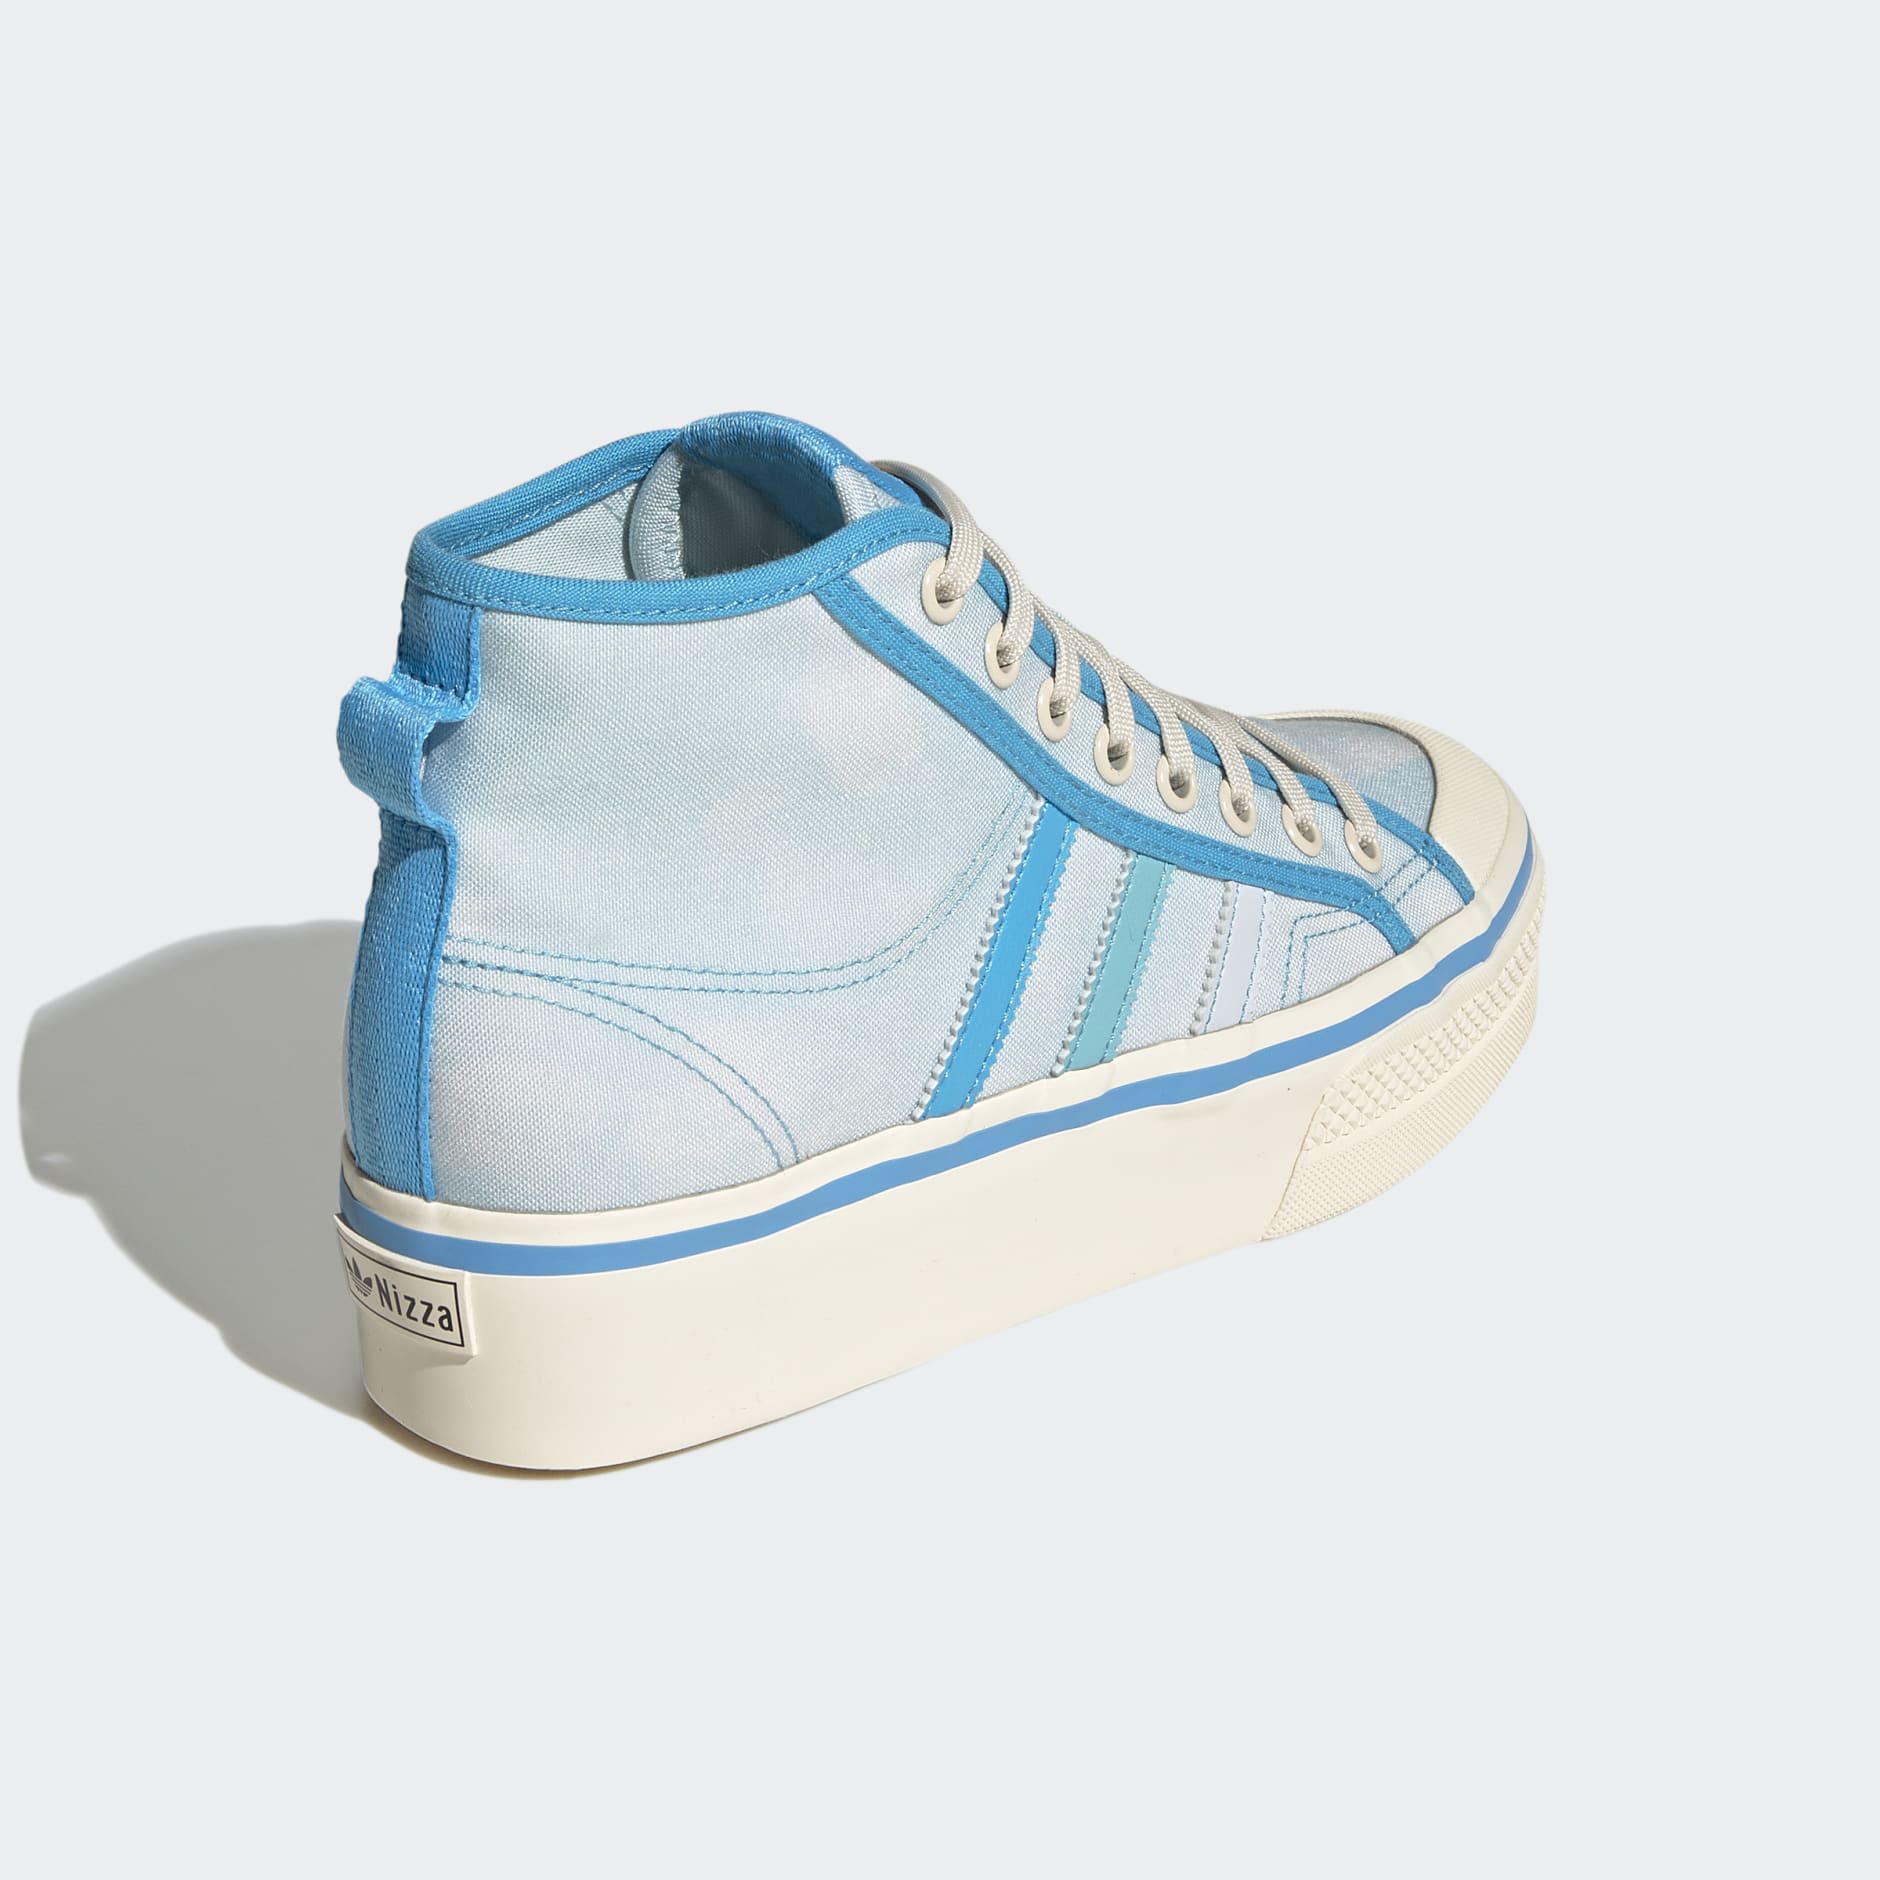 Shoes - Nizza Platform Mid Shoes - Blue | adidas Israel